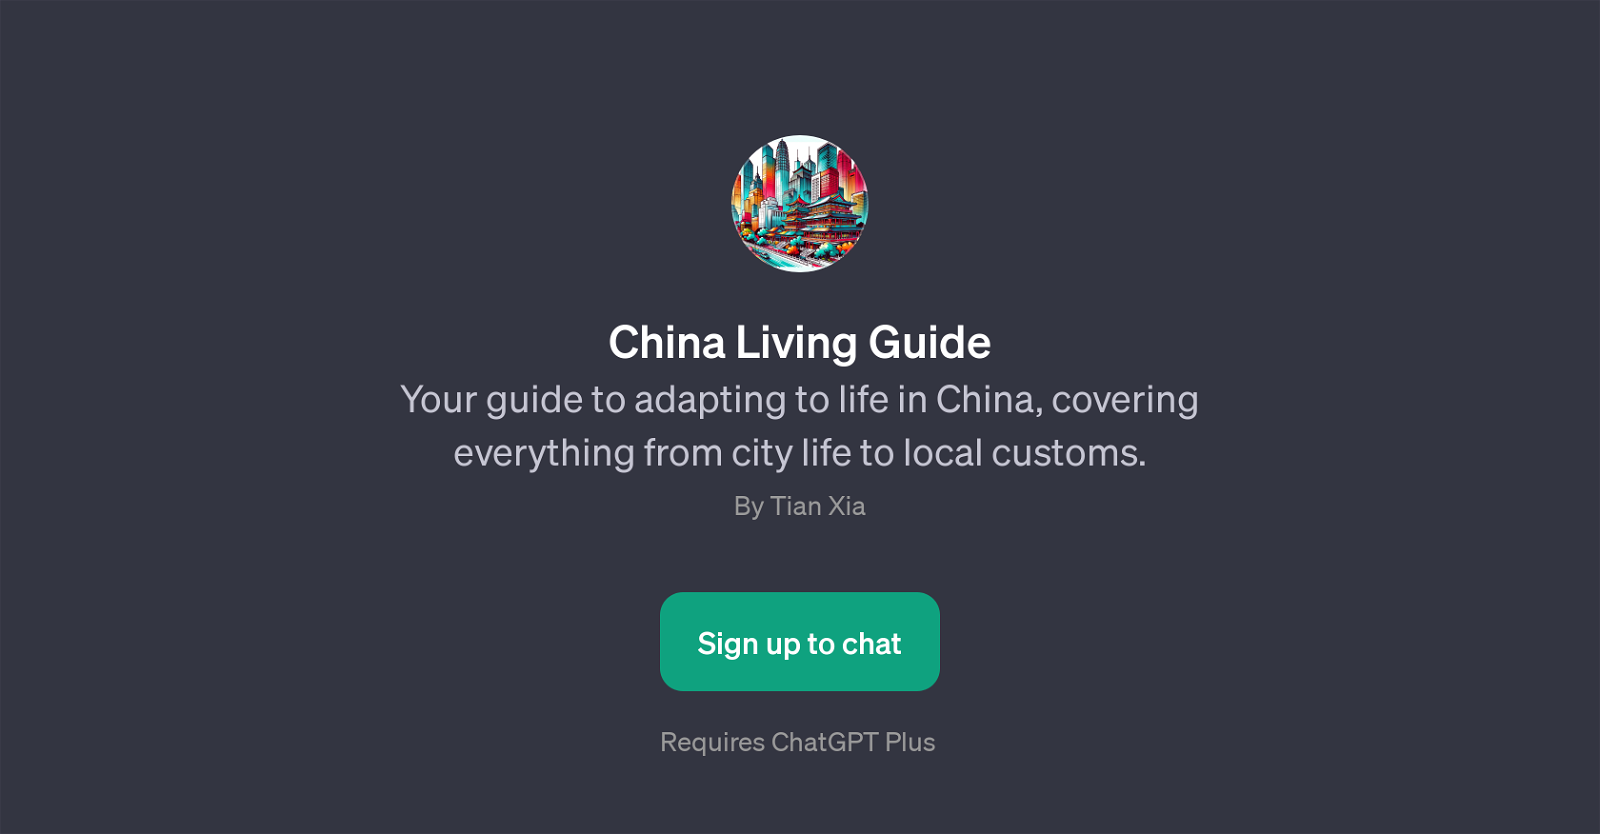 China Living Guide website